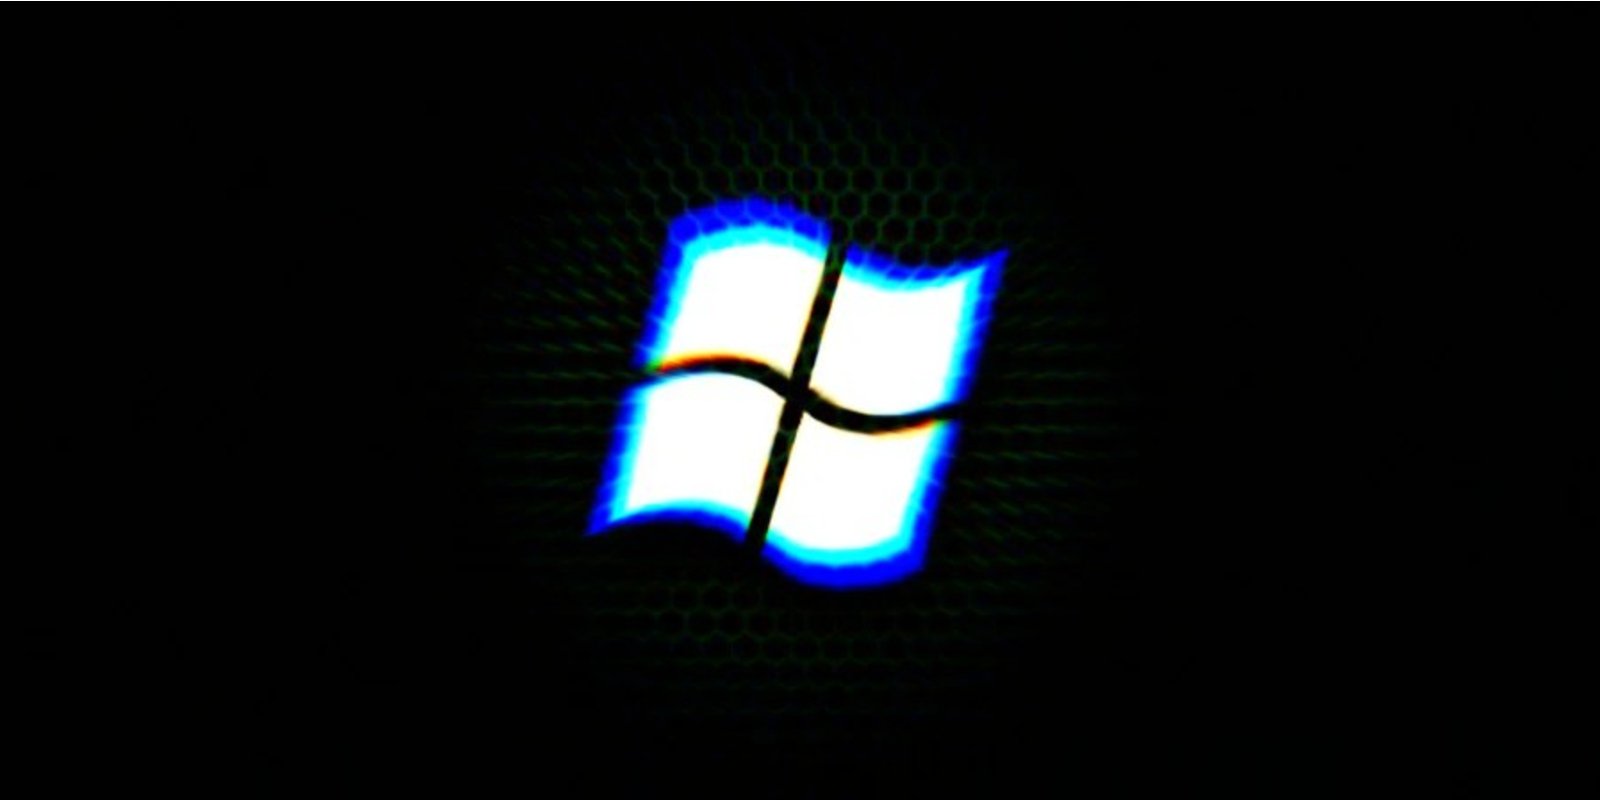 Microsoft partially fixes Windows 7, Server 2008 vulnerability